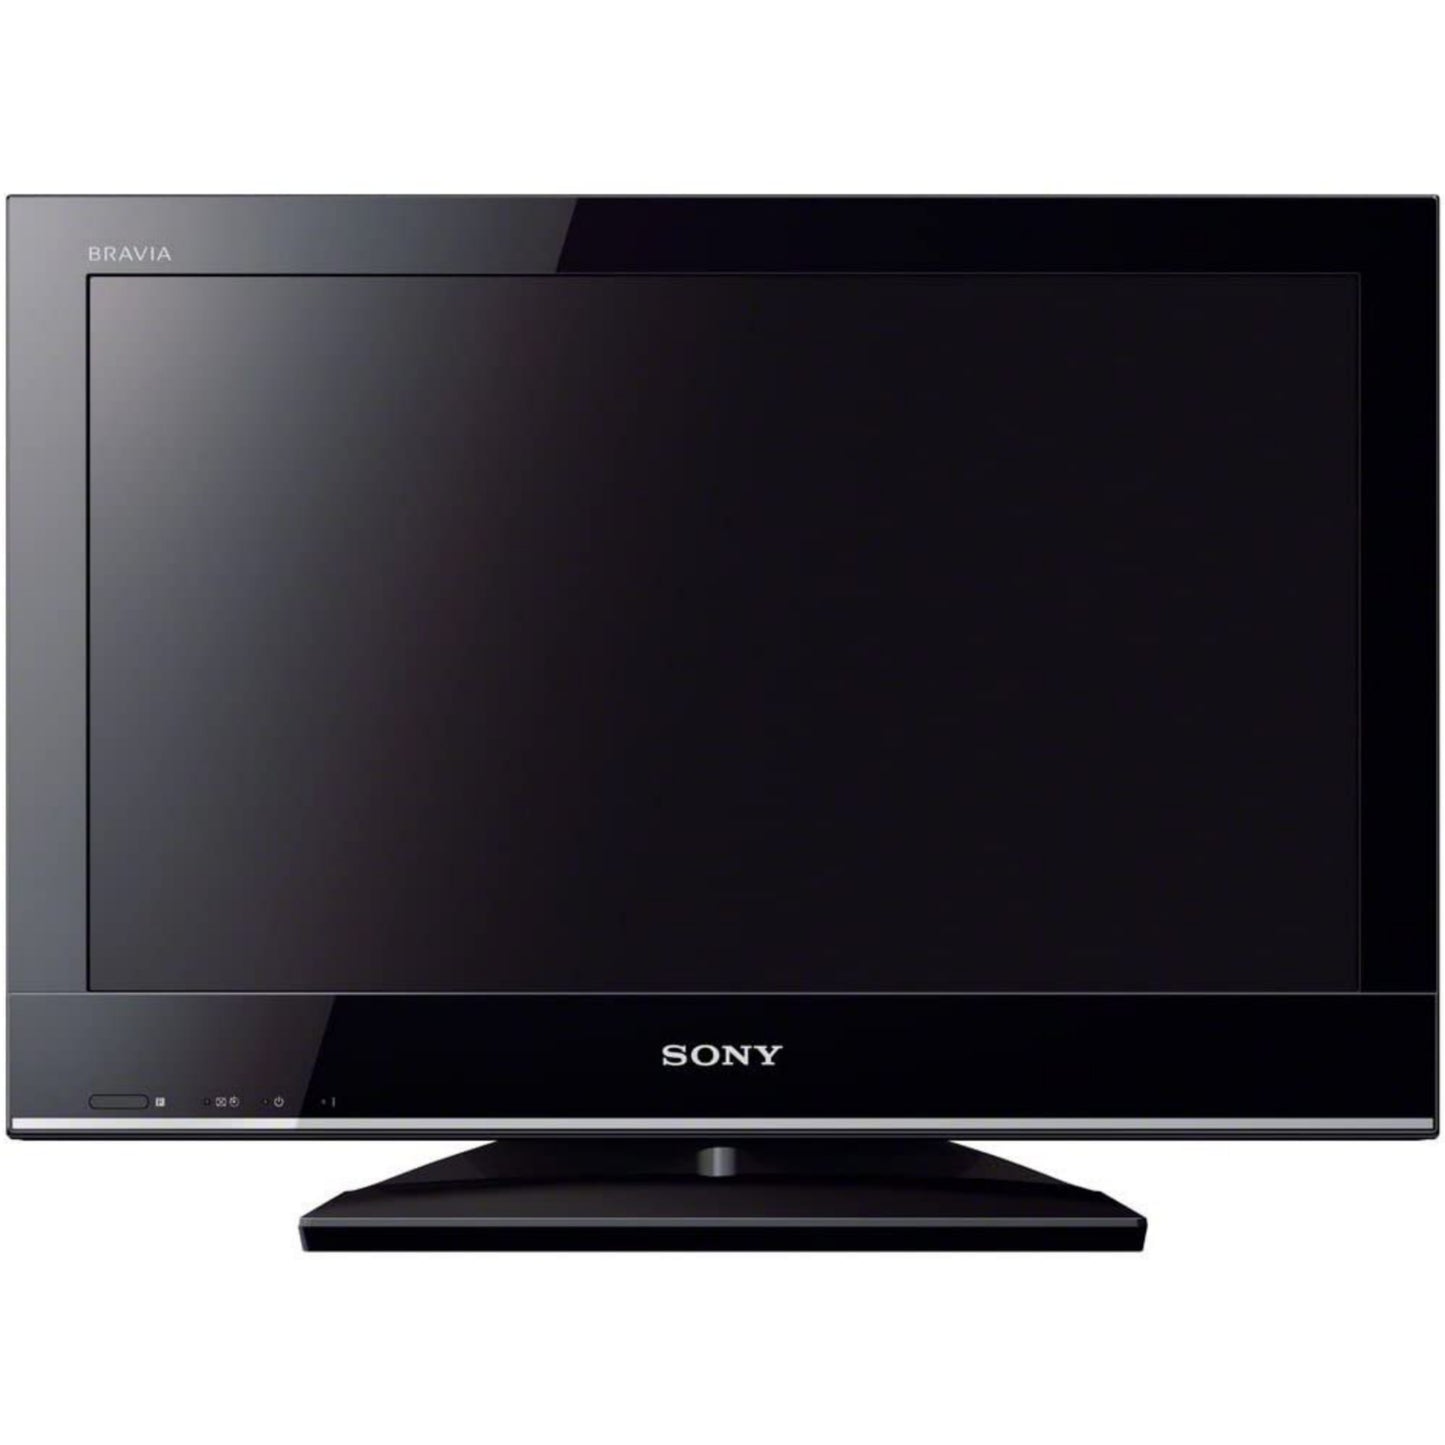 Sony BRAVIA 22 Inch Full HD LCD TV With HDMI, AV inputs